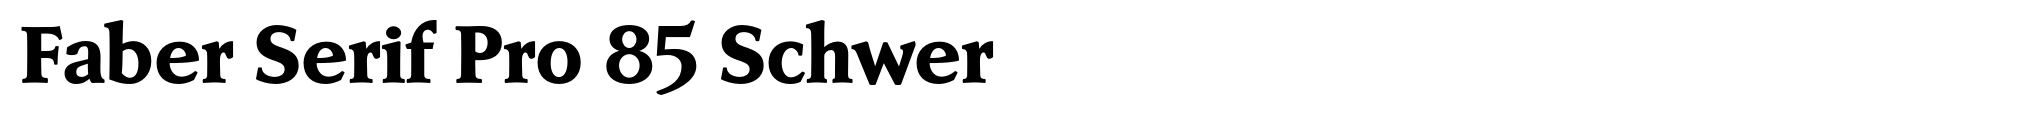 Faber Serif Pro 85 Schwer image